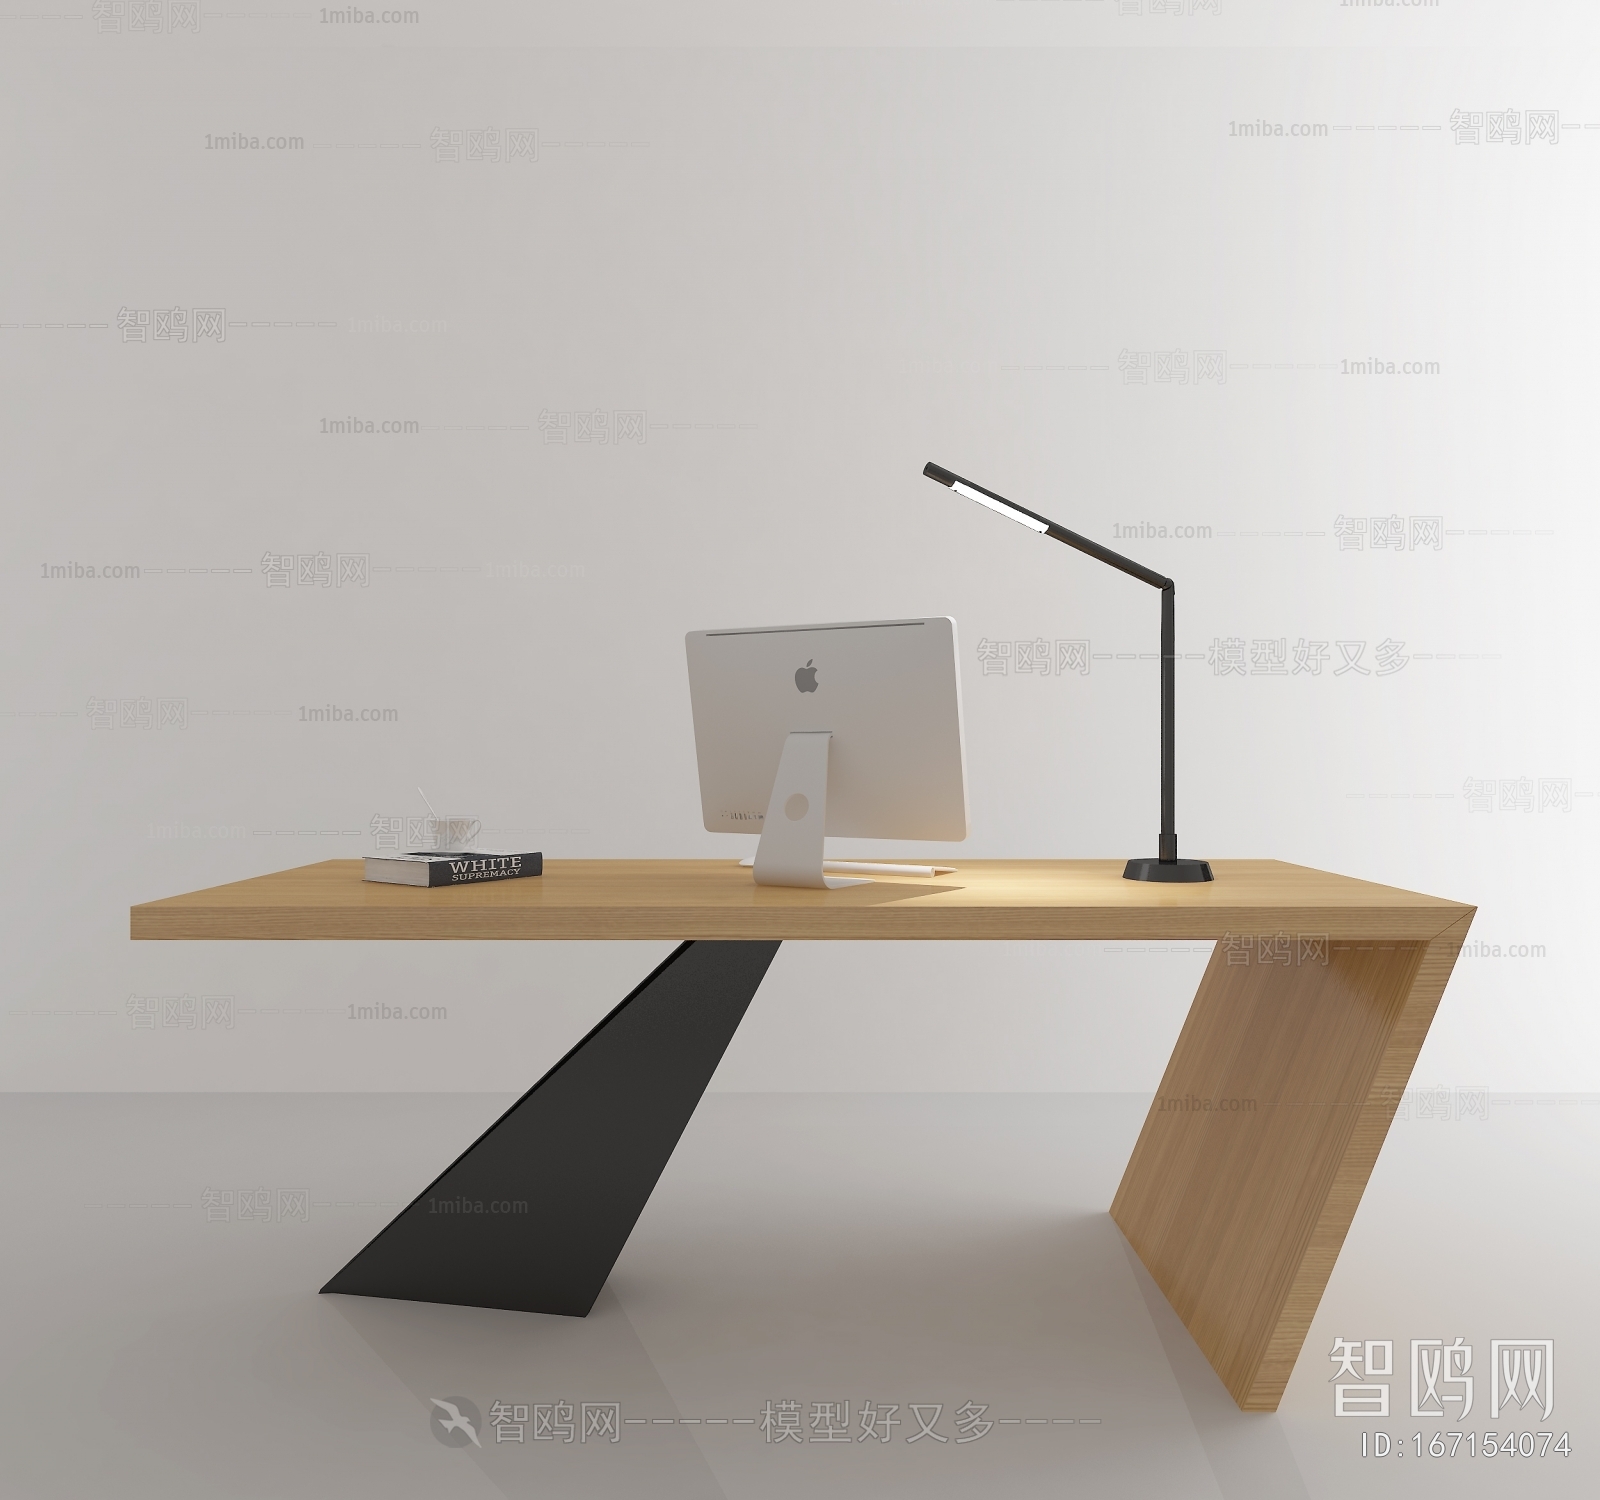 Modern Office Table